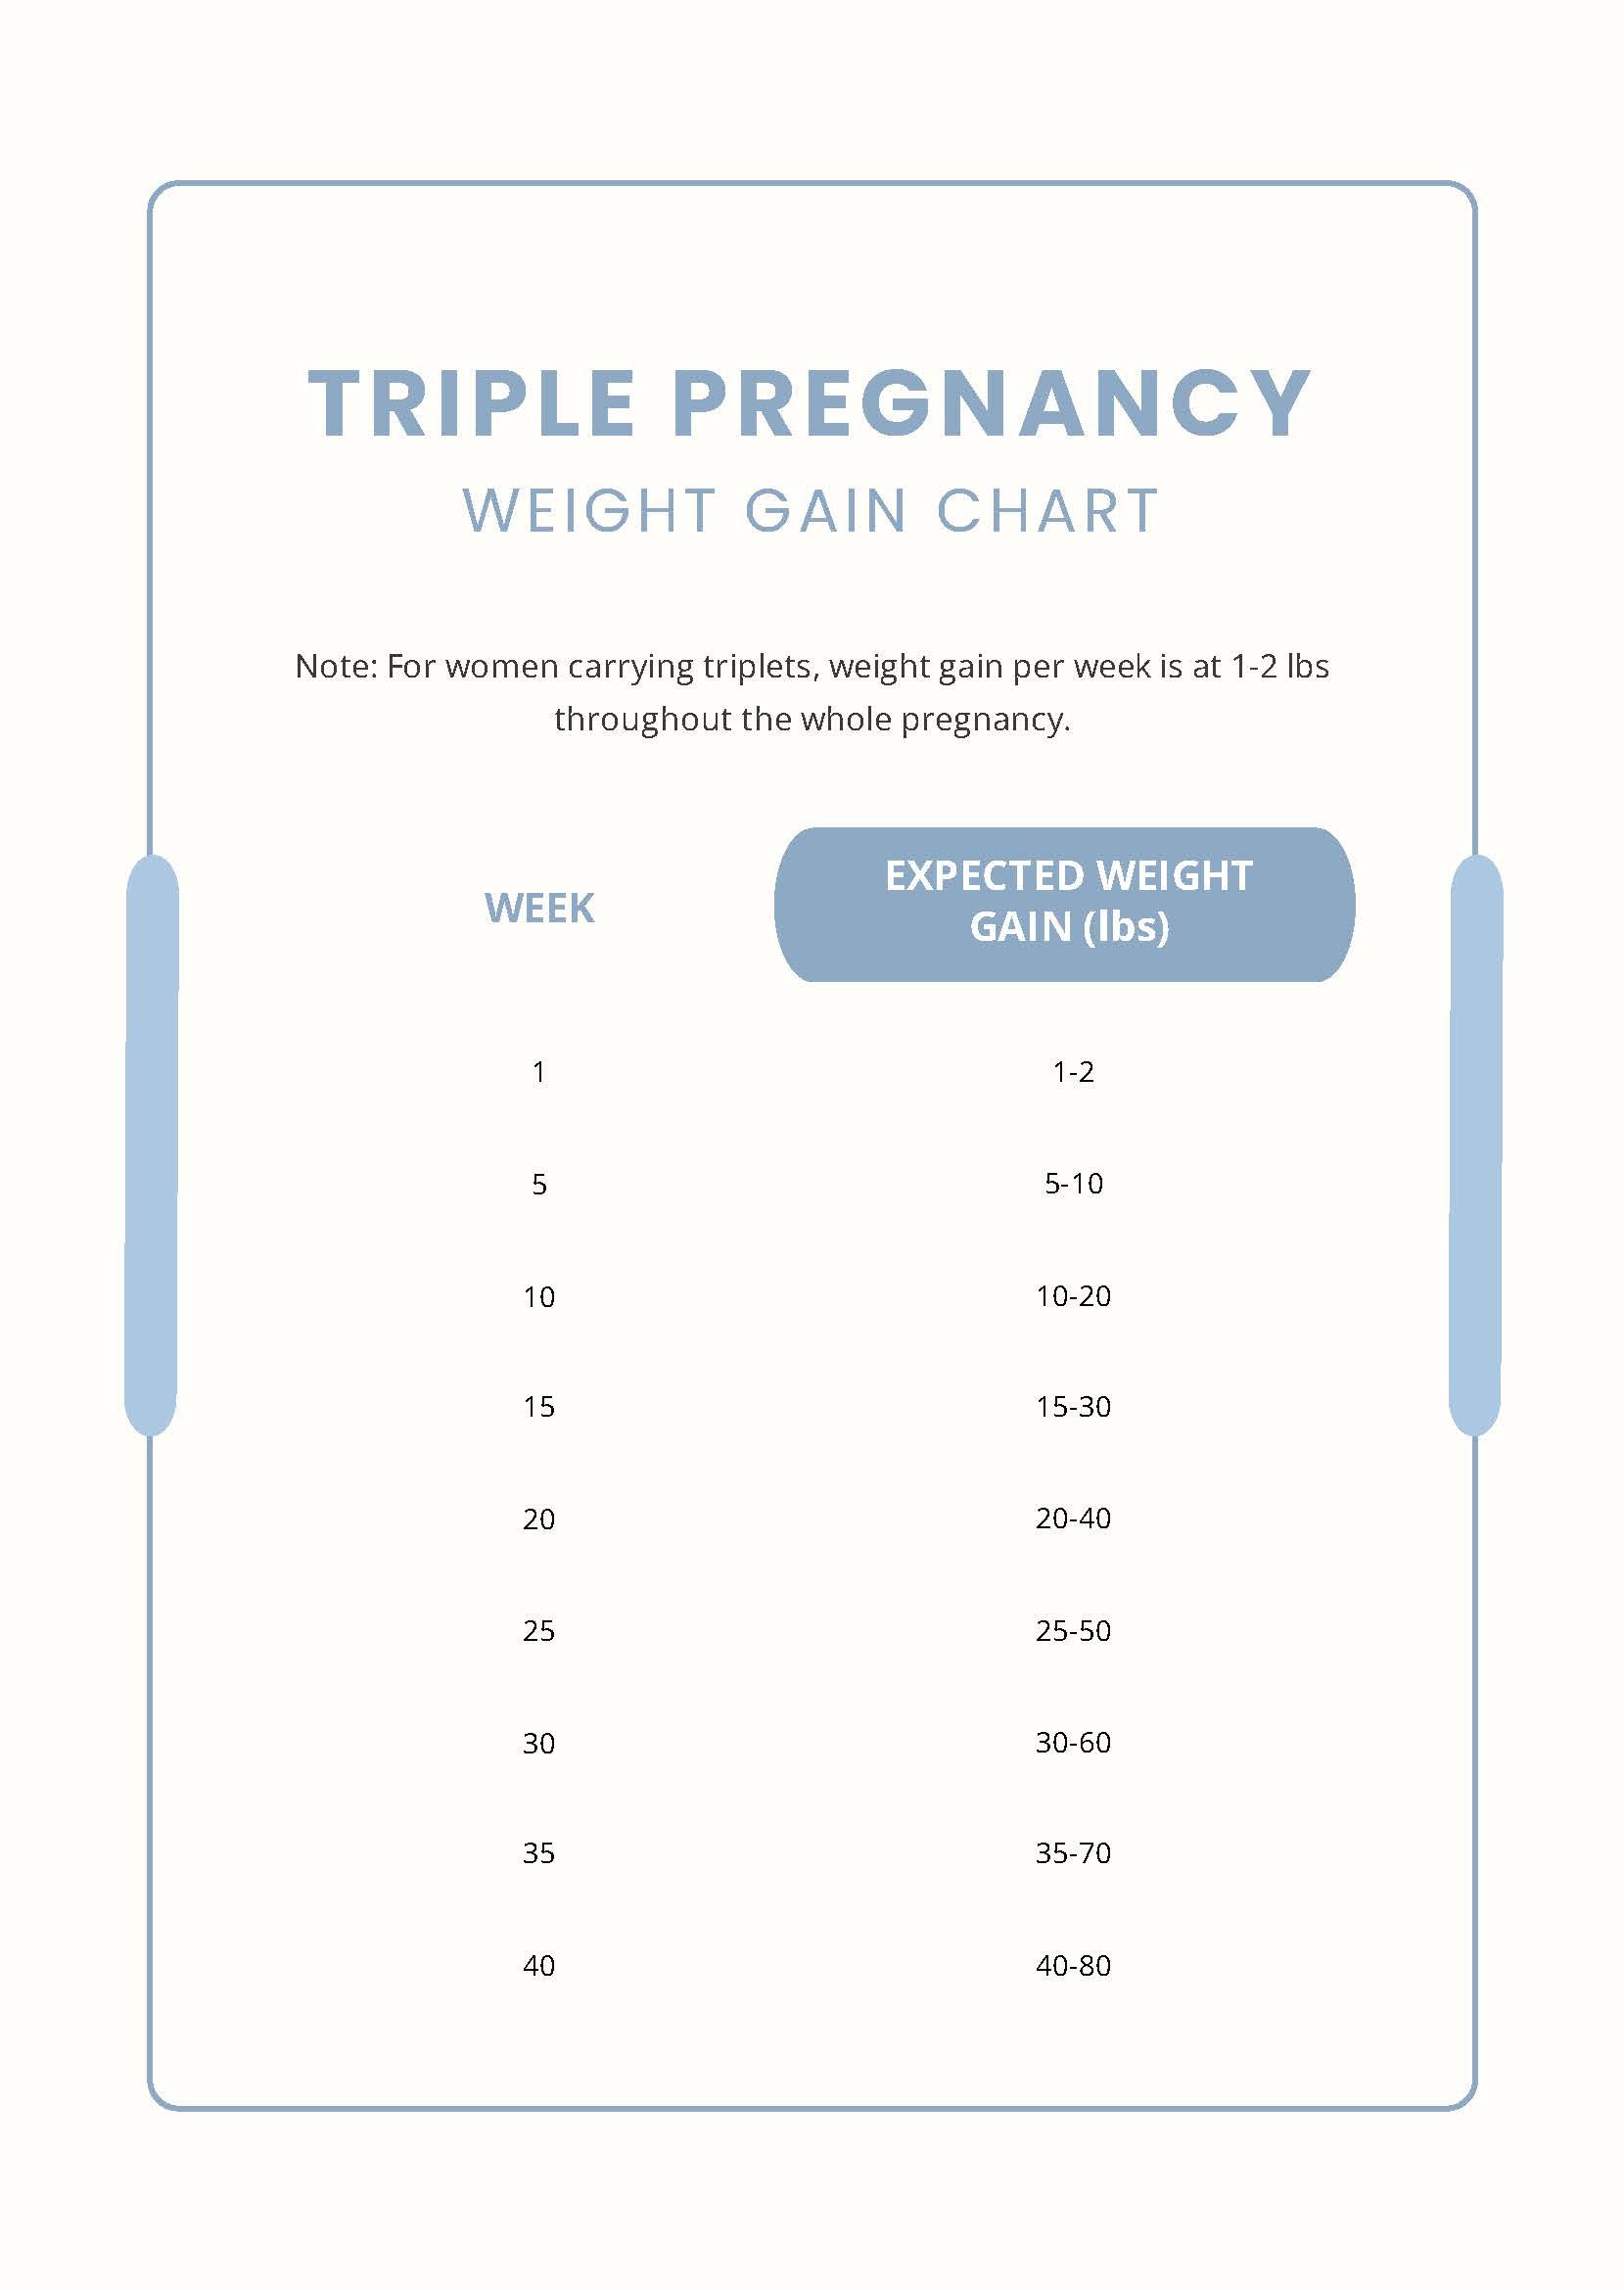 Triplet Pregnancy Weight Gain Chart